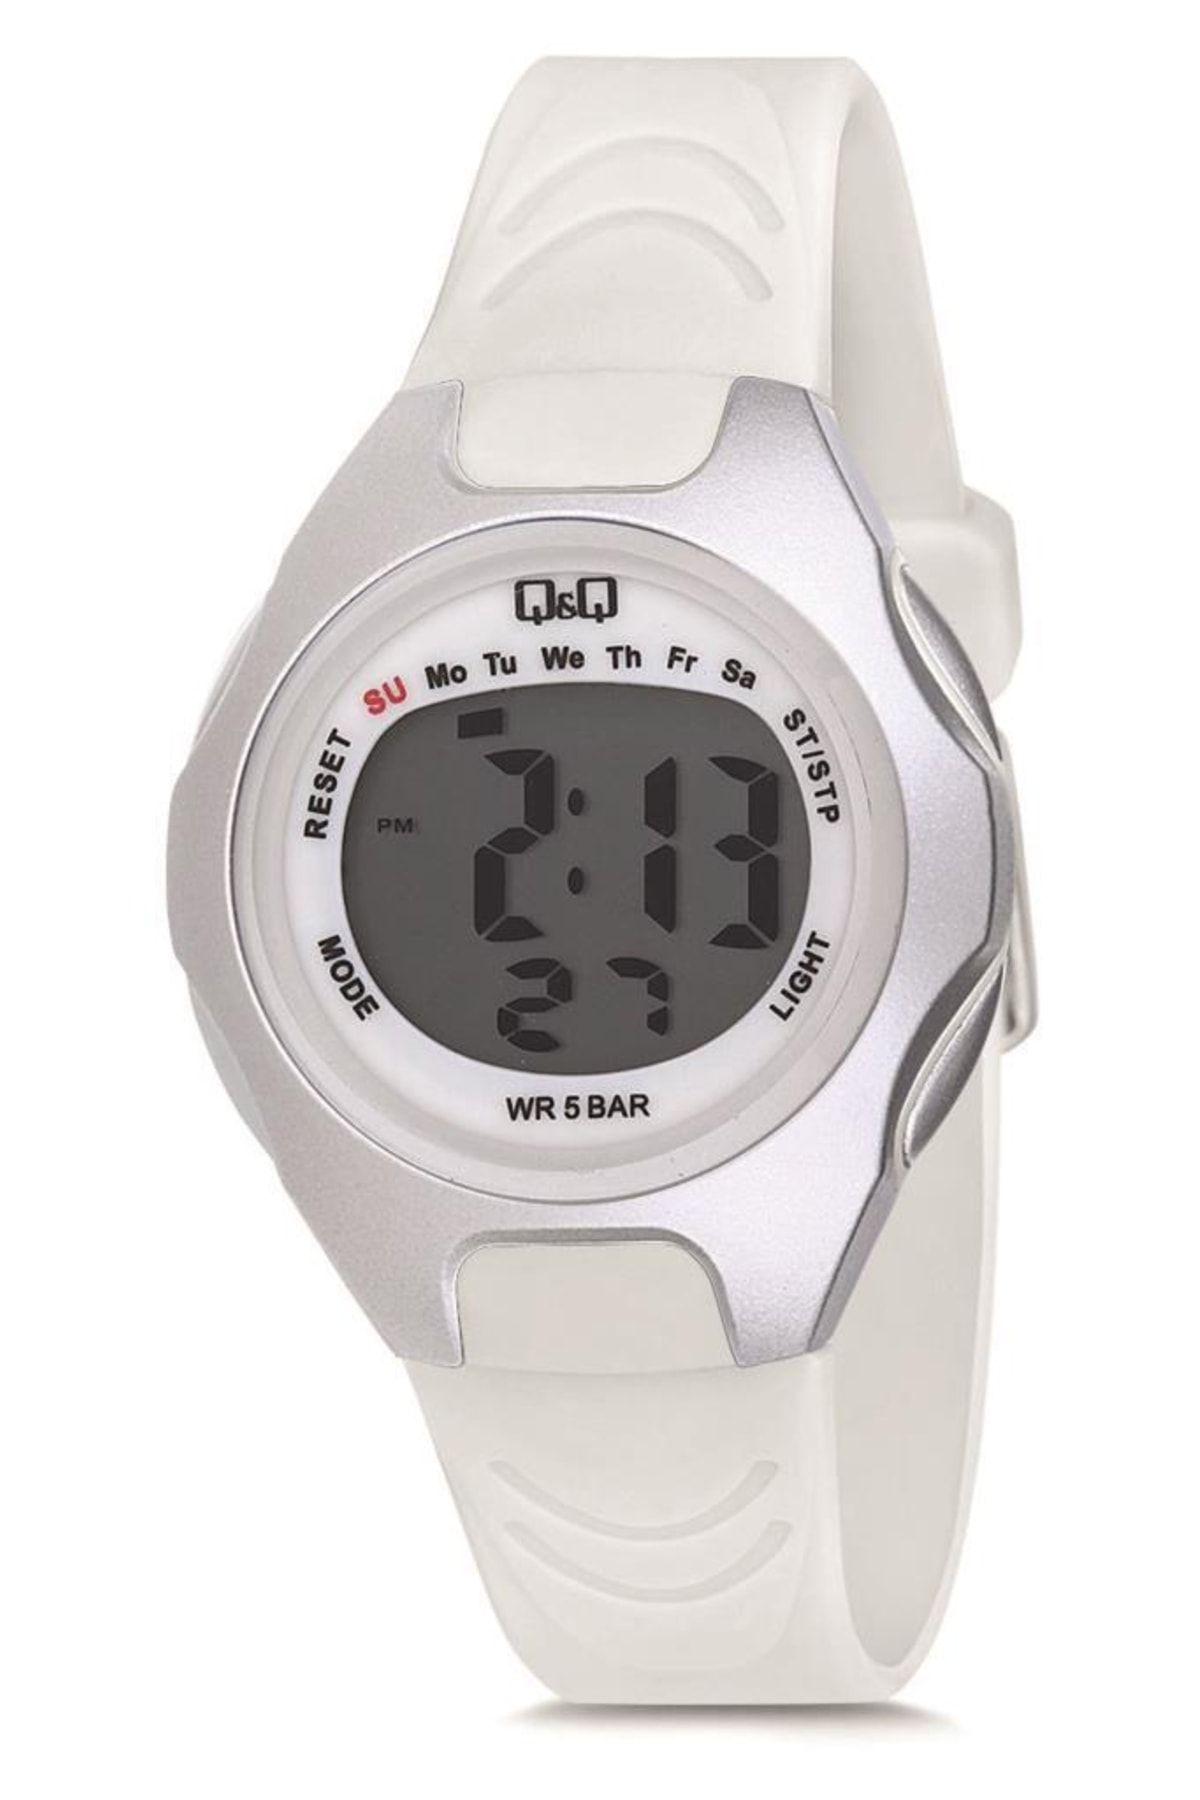 Q Q 5-10 Yaş Alarmlı, Kronometreli, Işıklı, 100 Metre Su Geçirmez Beyaz Çocuk Kol Saati